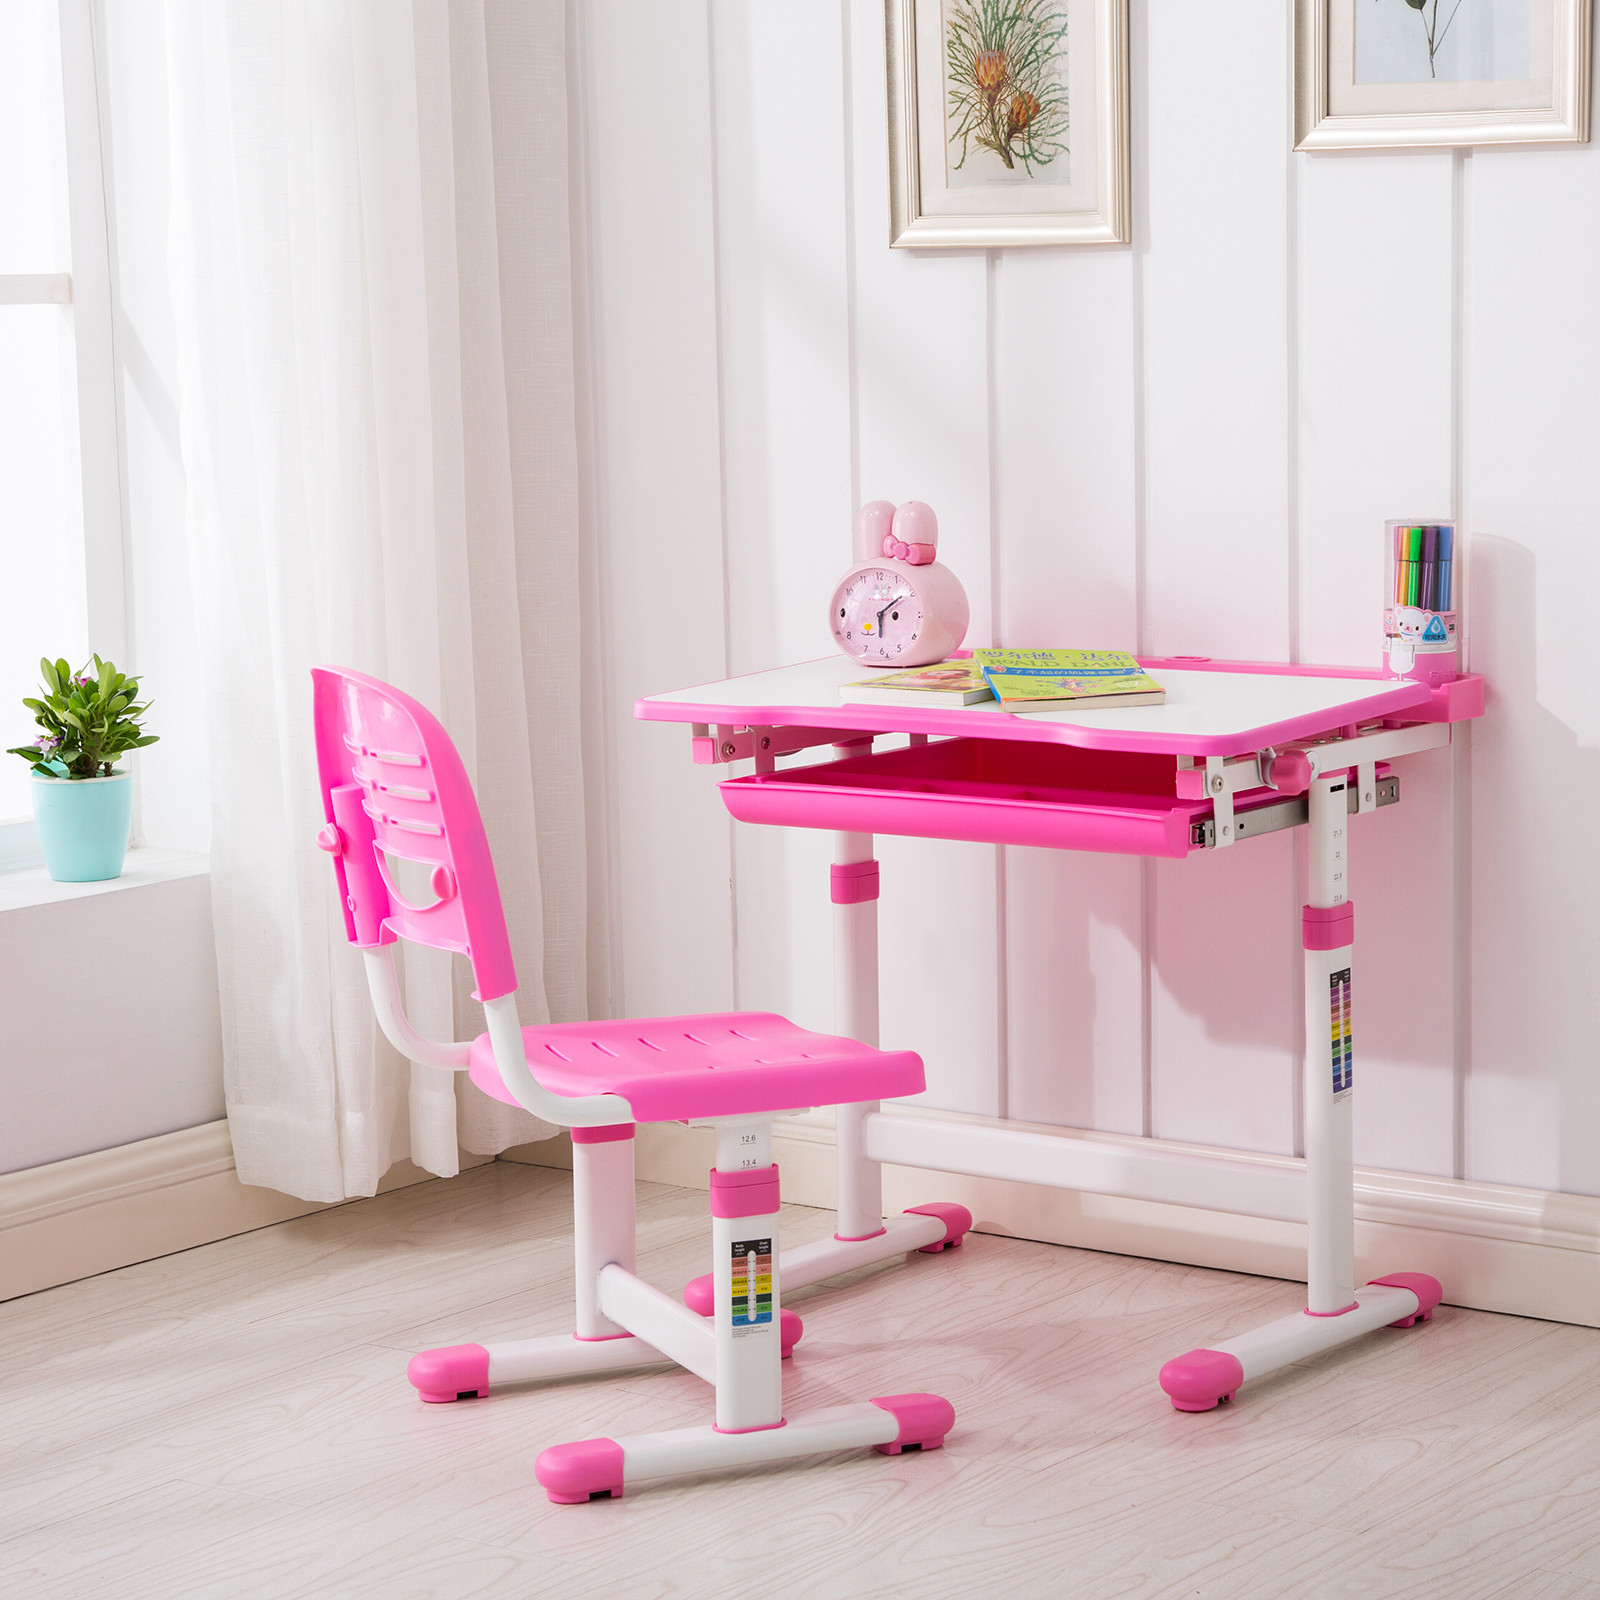 Kids Desk And Chair
 Pink Adjustable Children s Desk and Chair Set Child Kids